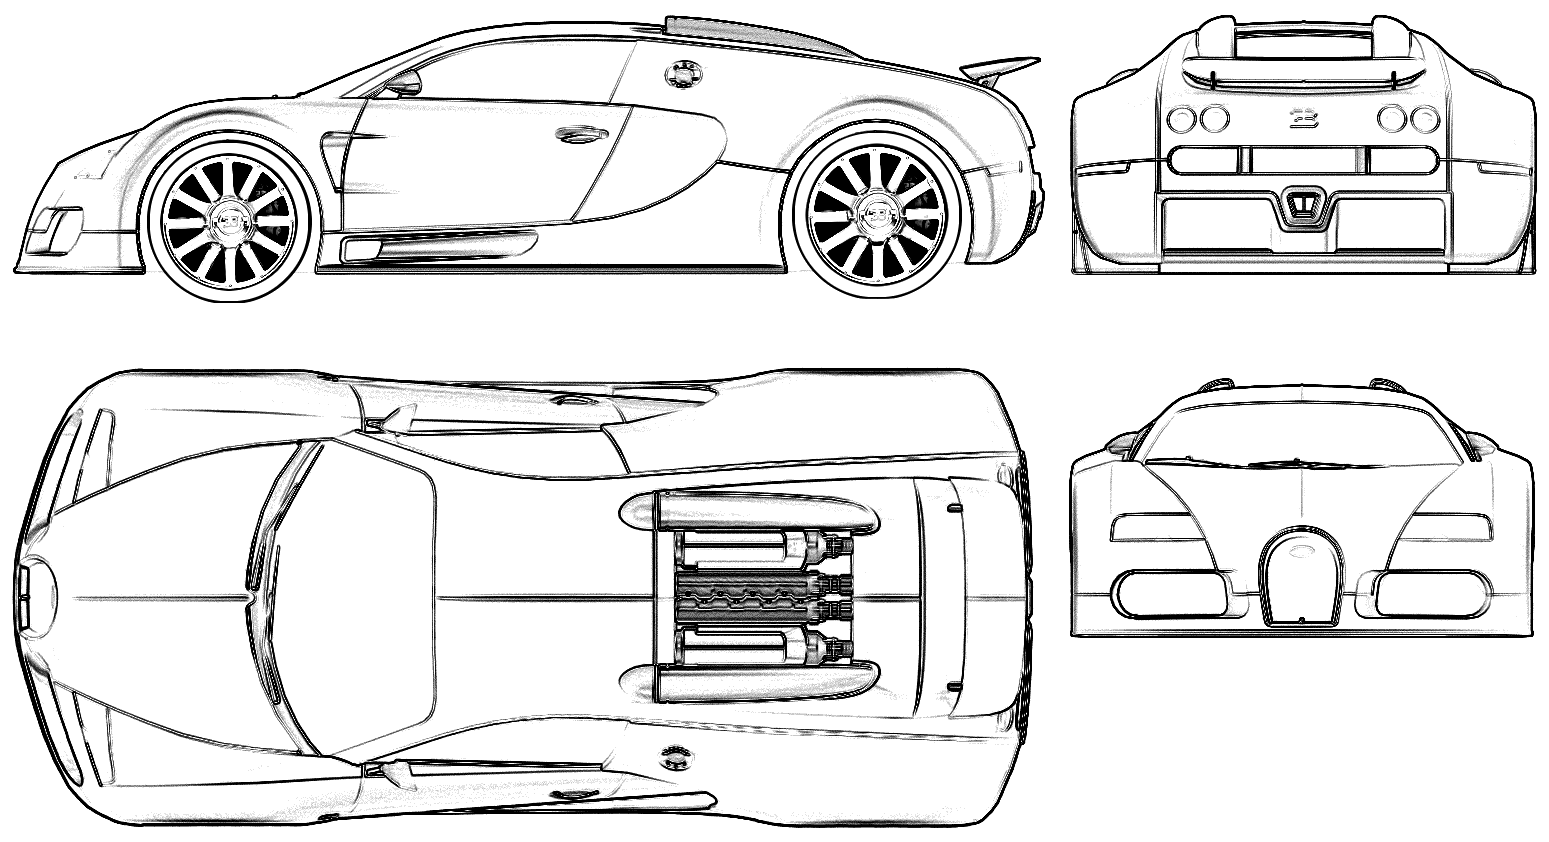 2005 Bugatti Veyron Coupe blueprints EB 16.4 - Outlines v2 free